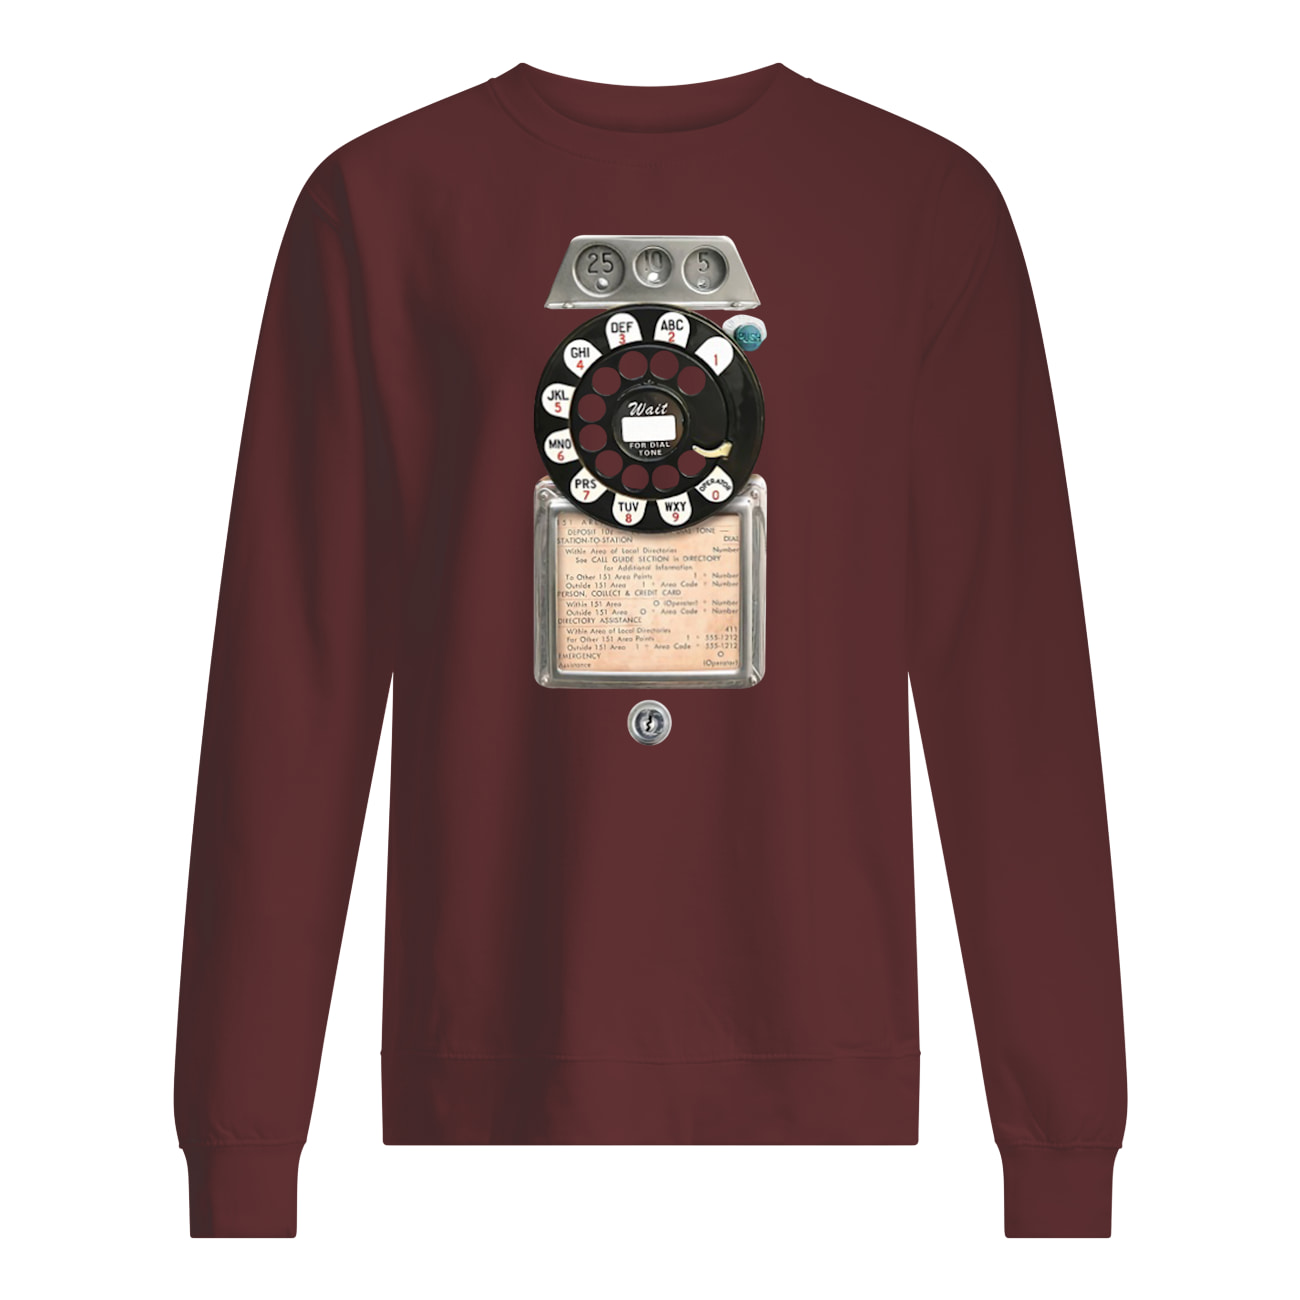 Retro rotary phone dial on graphic sweatshirt